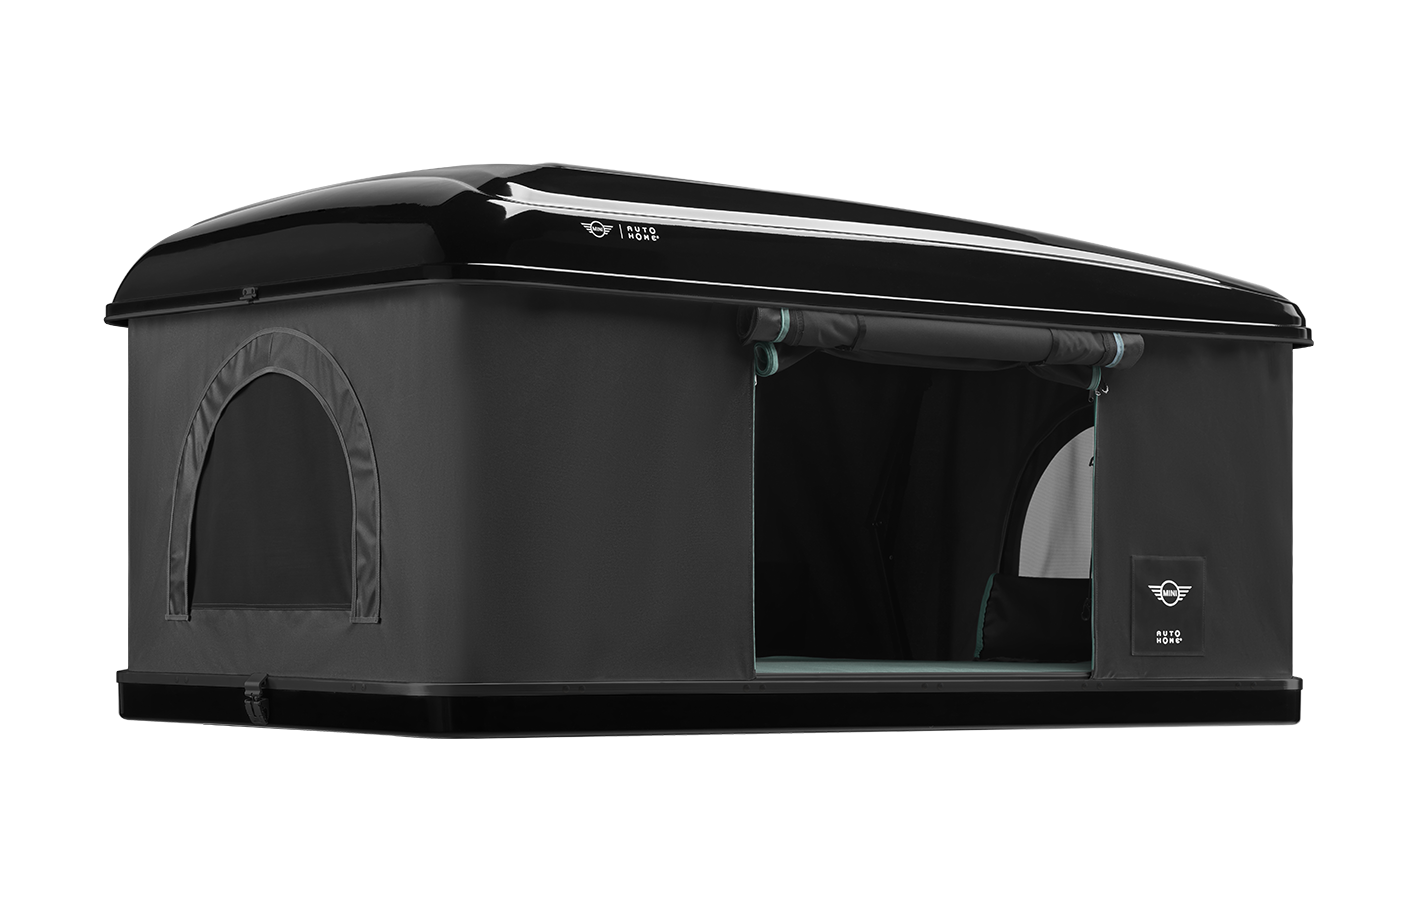 Suelo Camping Trento 250x400 cm - Negro antracita. Travellife - Taller  Speed Car